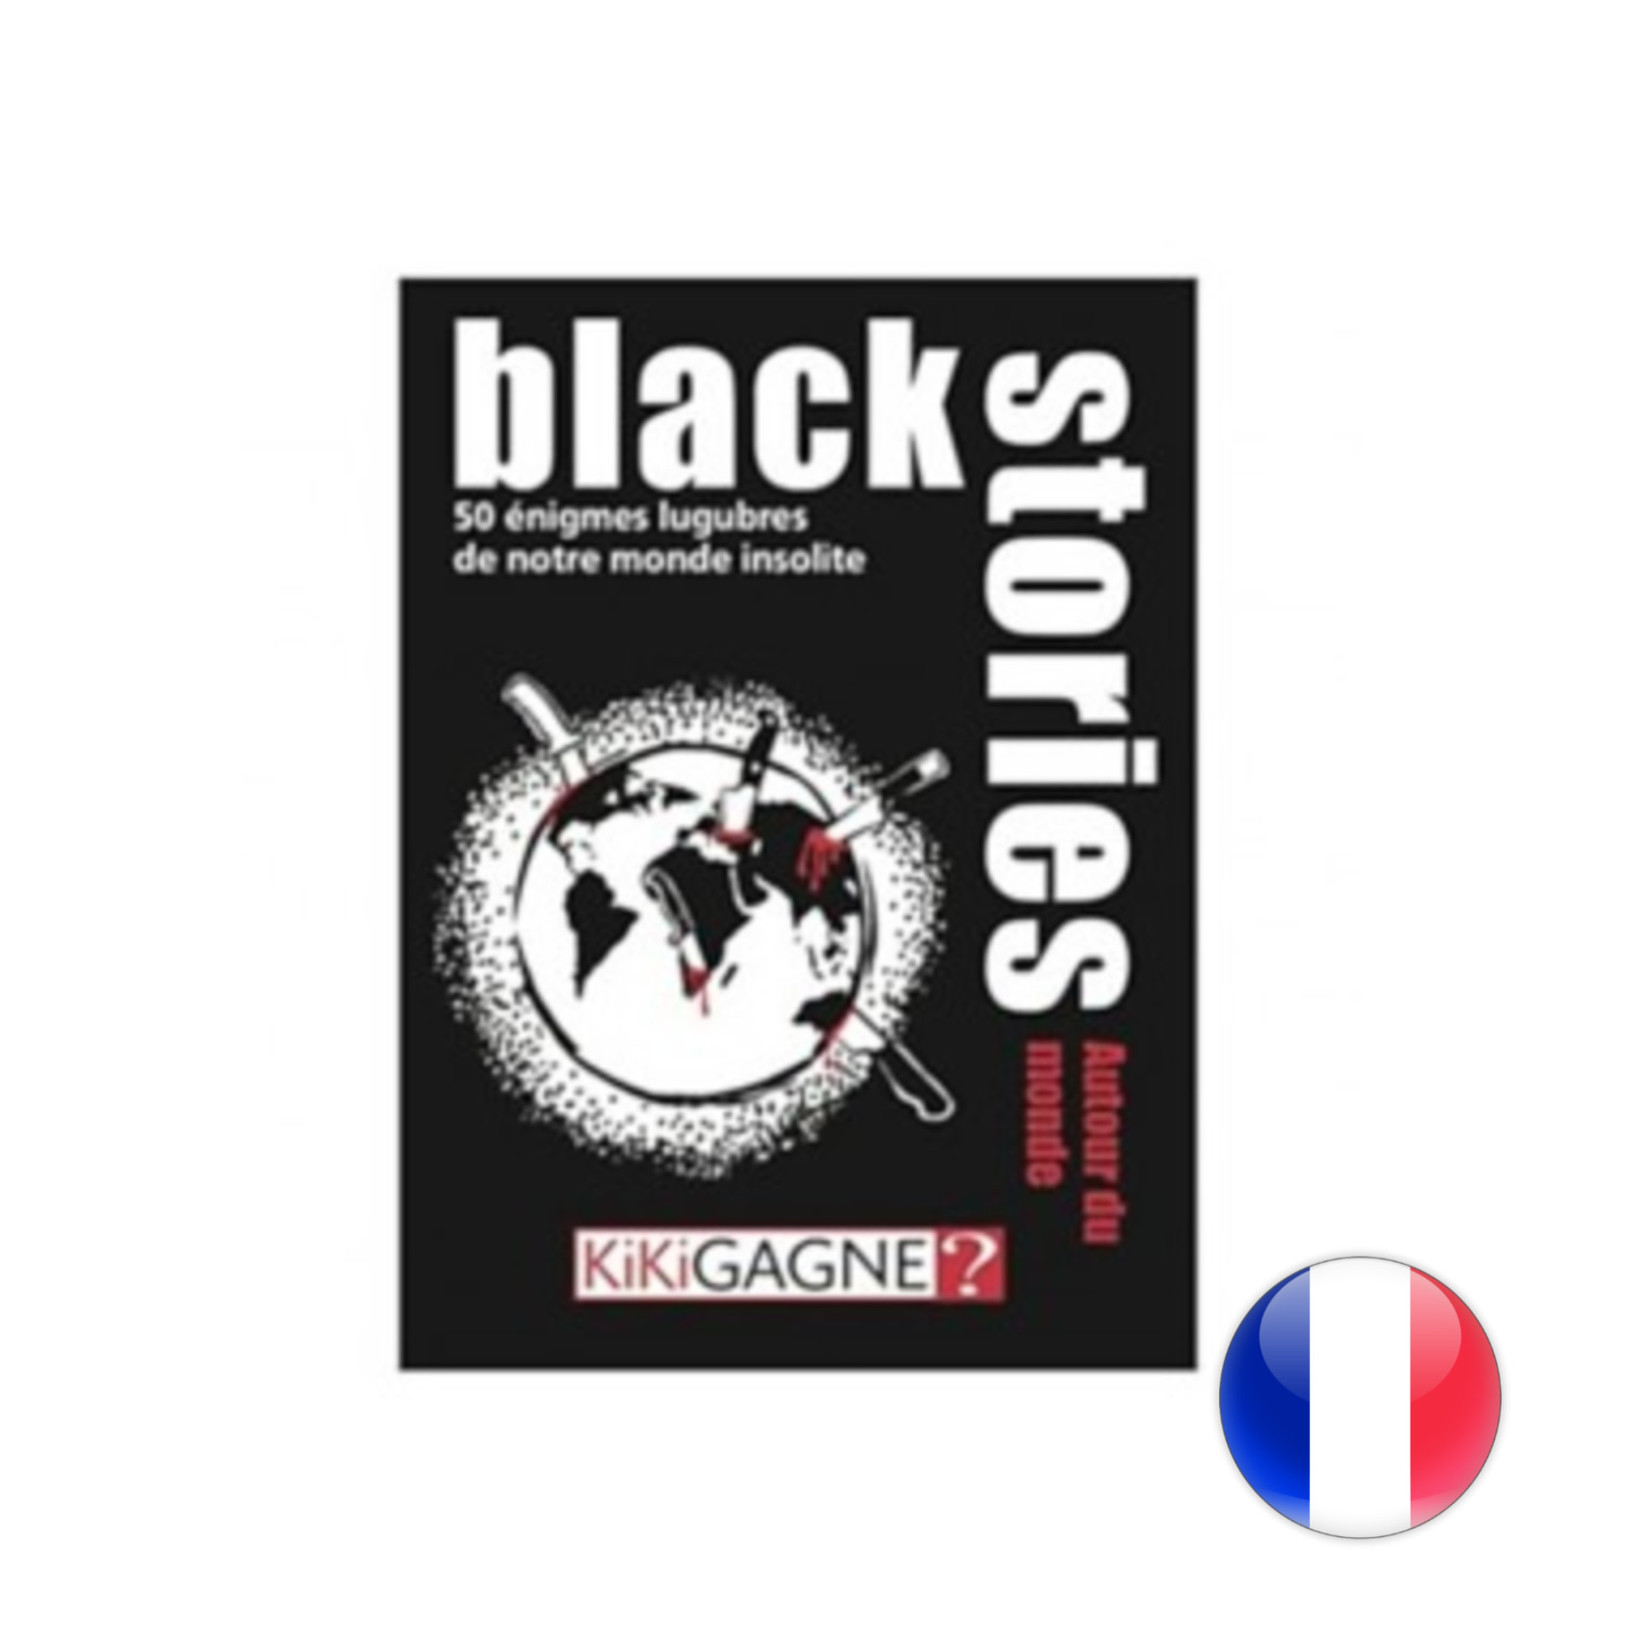 Kikigagne? Black Stories: Autour du monde